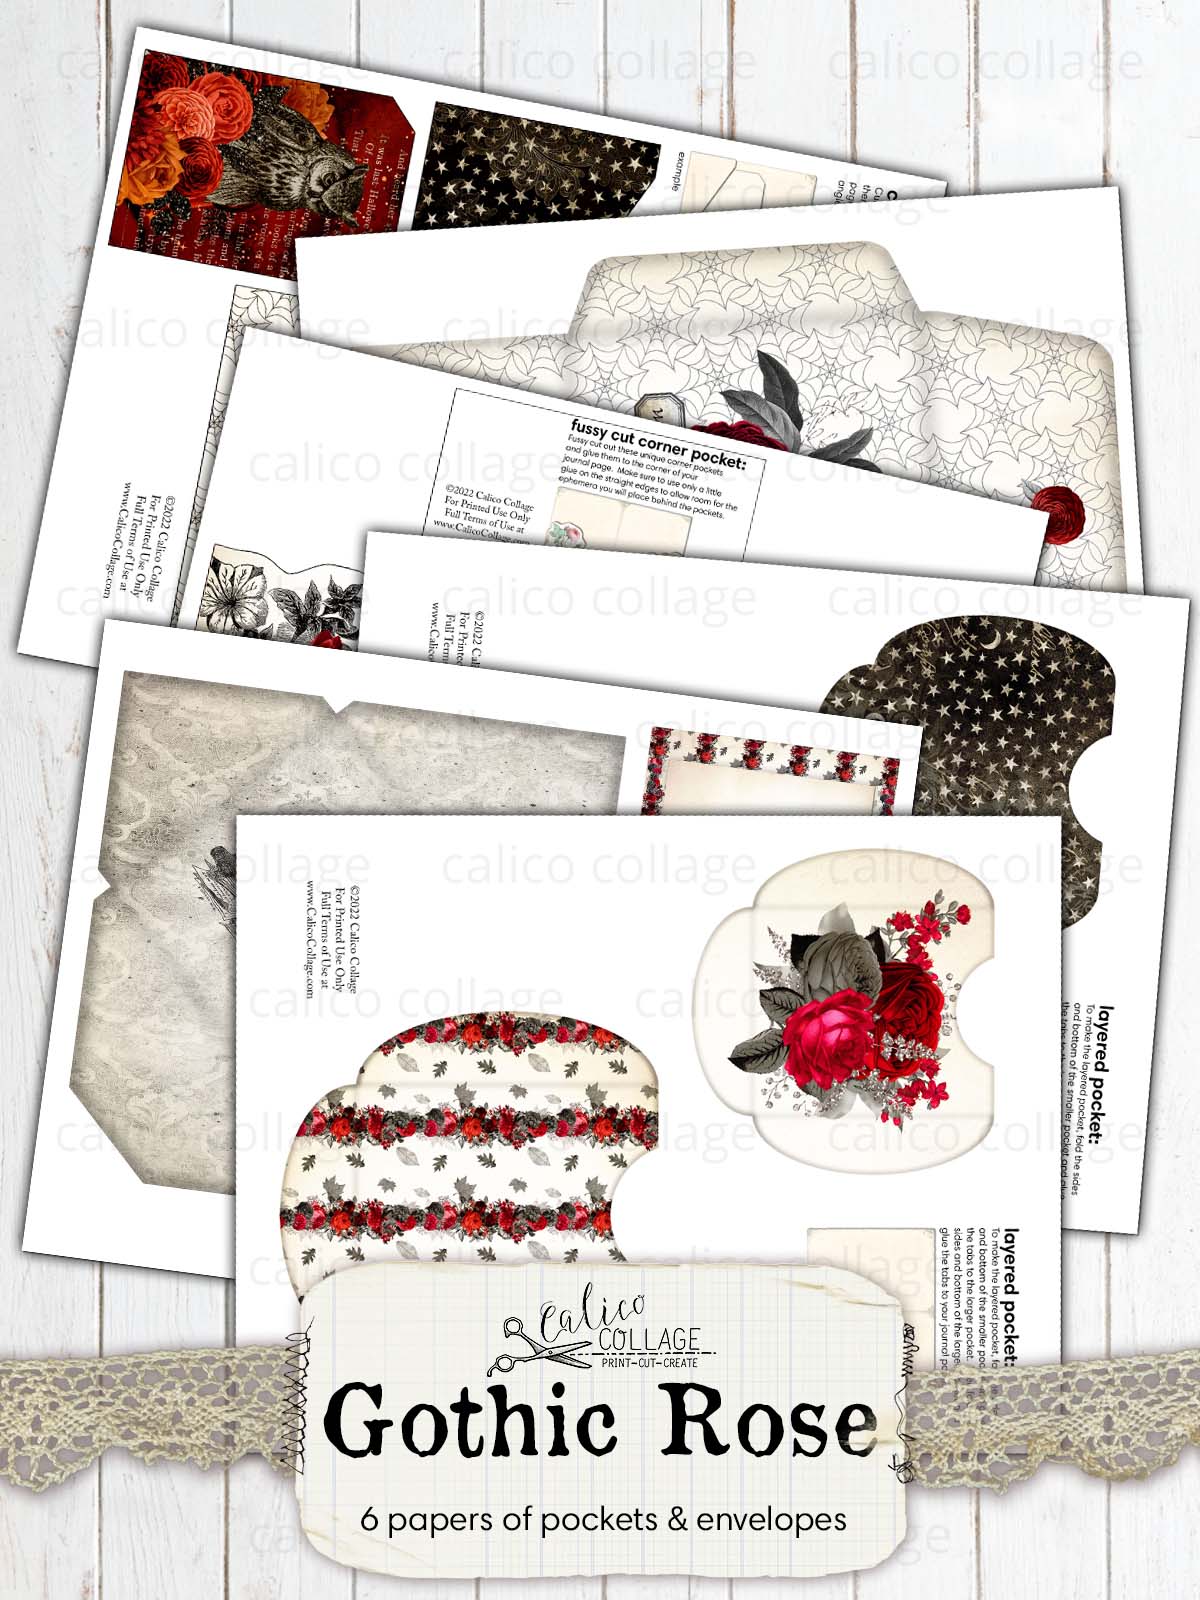 Cut & Create Ephemera Books By Calico Collage